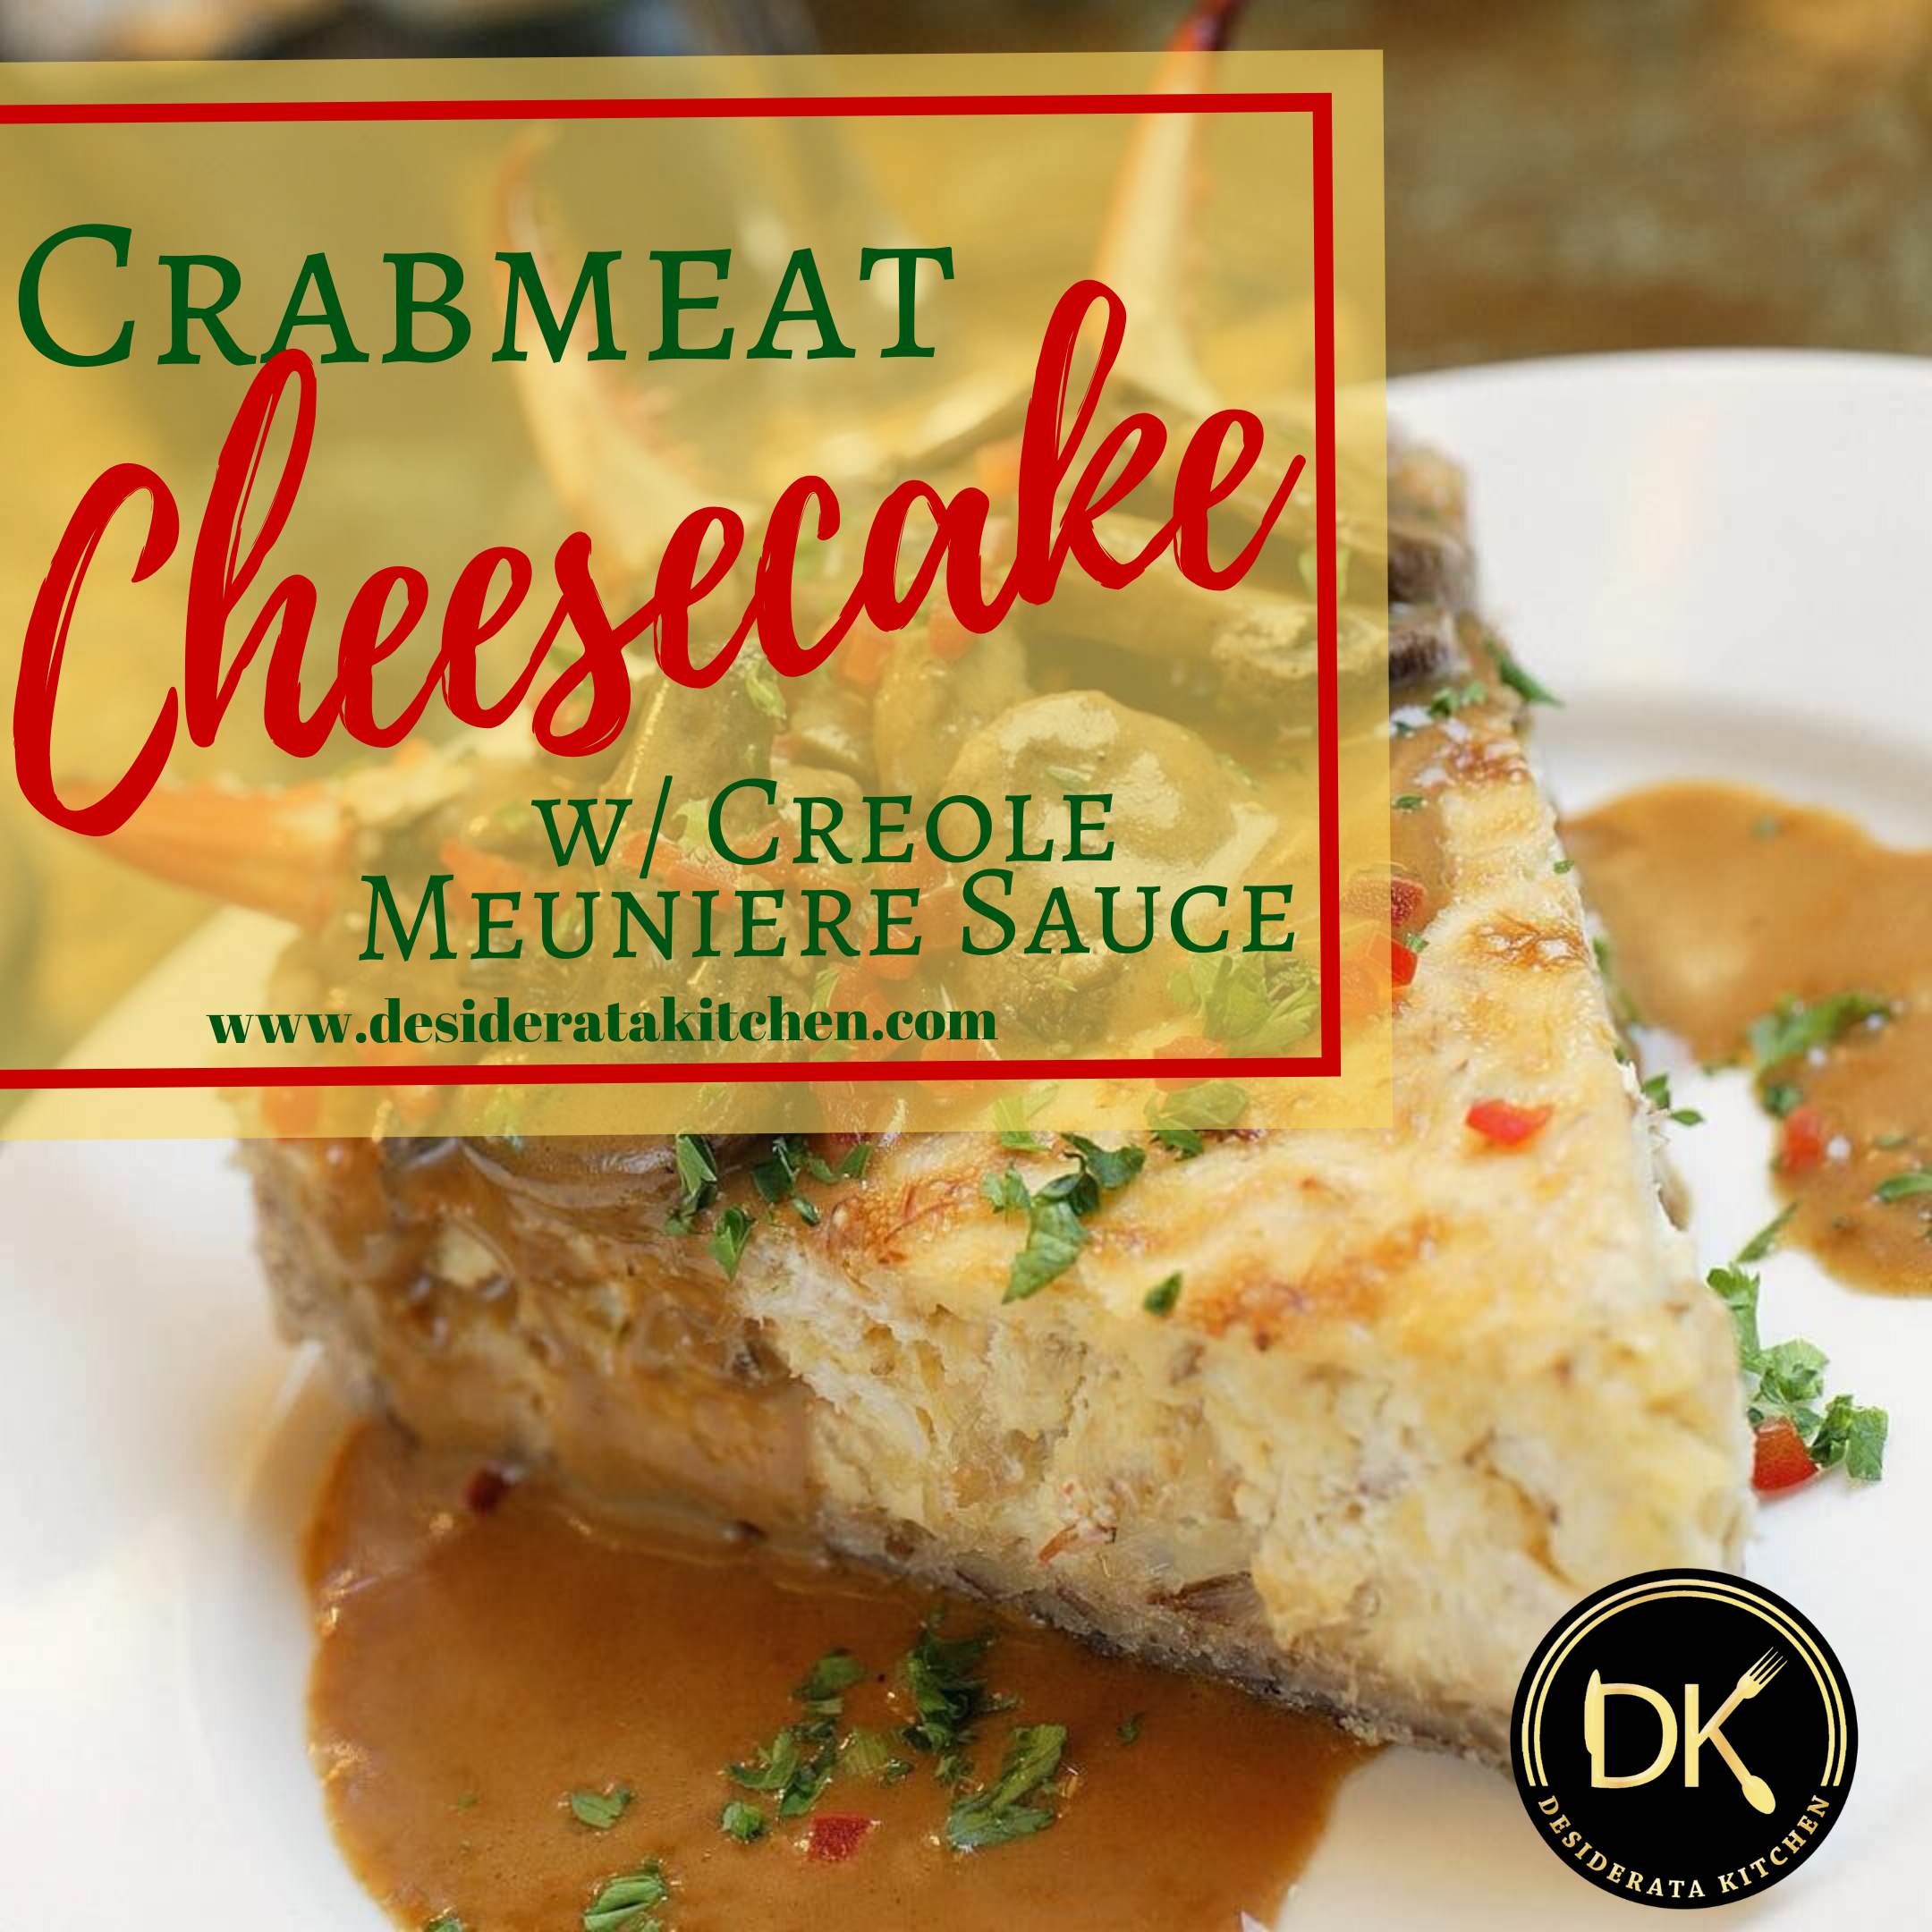 Crabmeat Cheesecake w/ Creole Meuniere Sauce